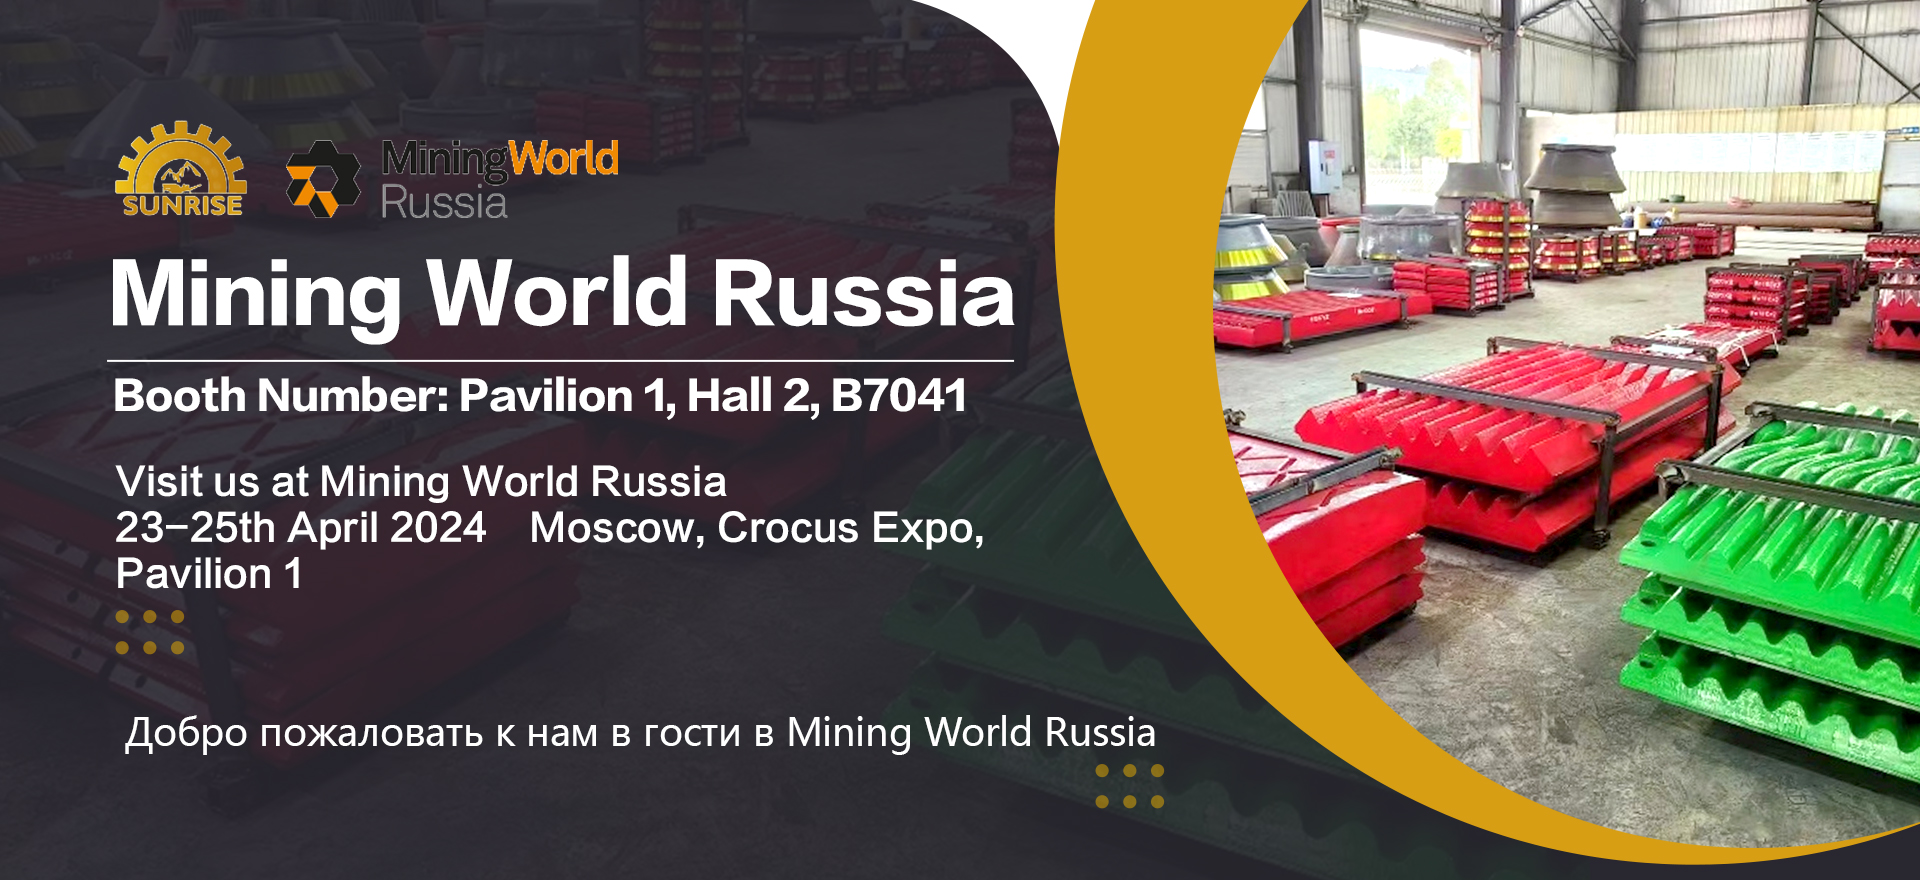 Sunrise Mining World Rússia